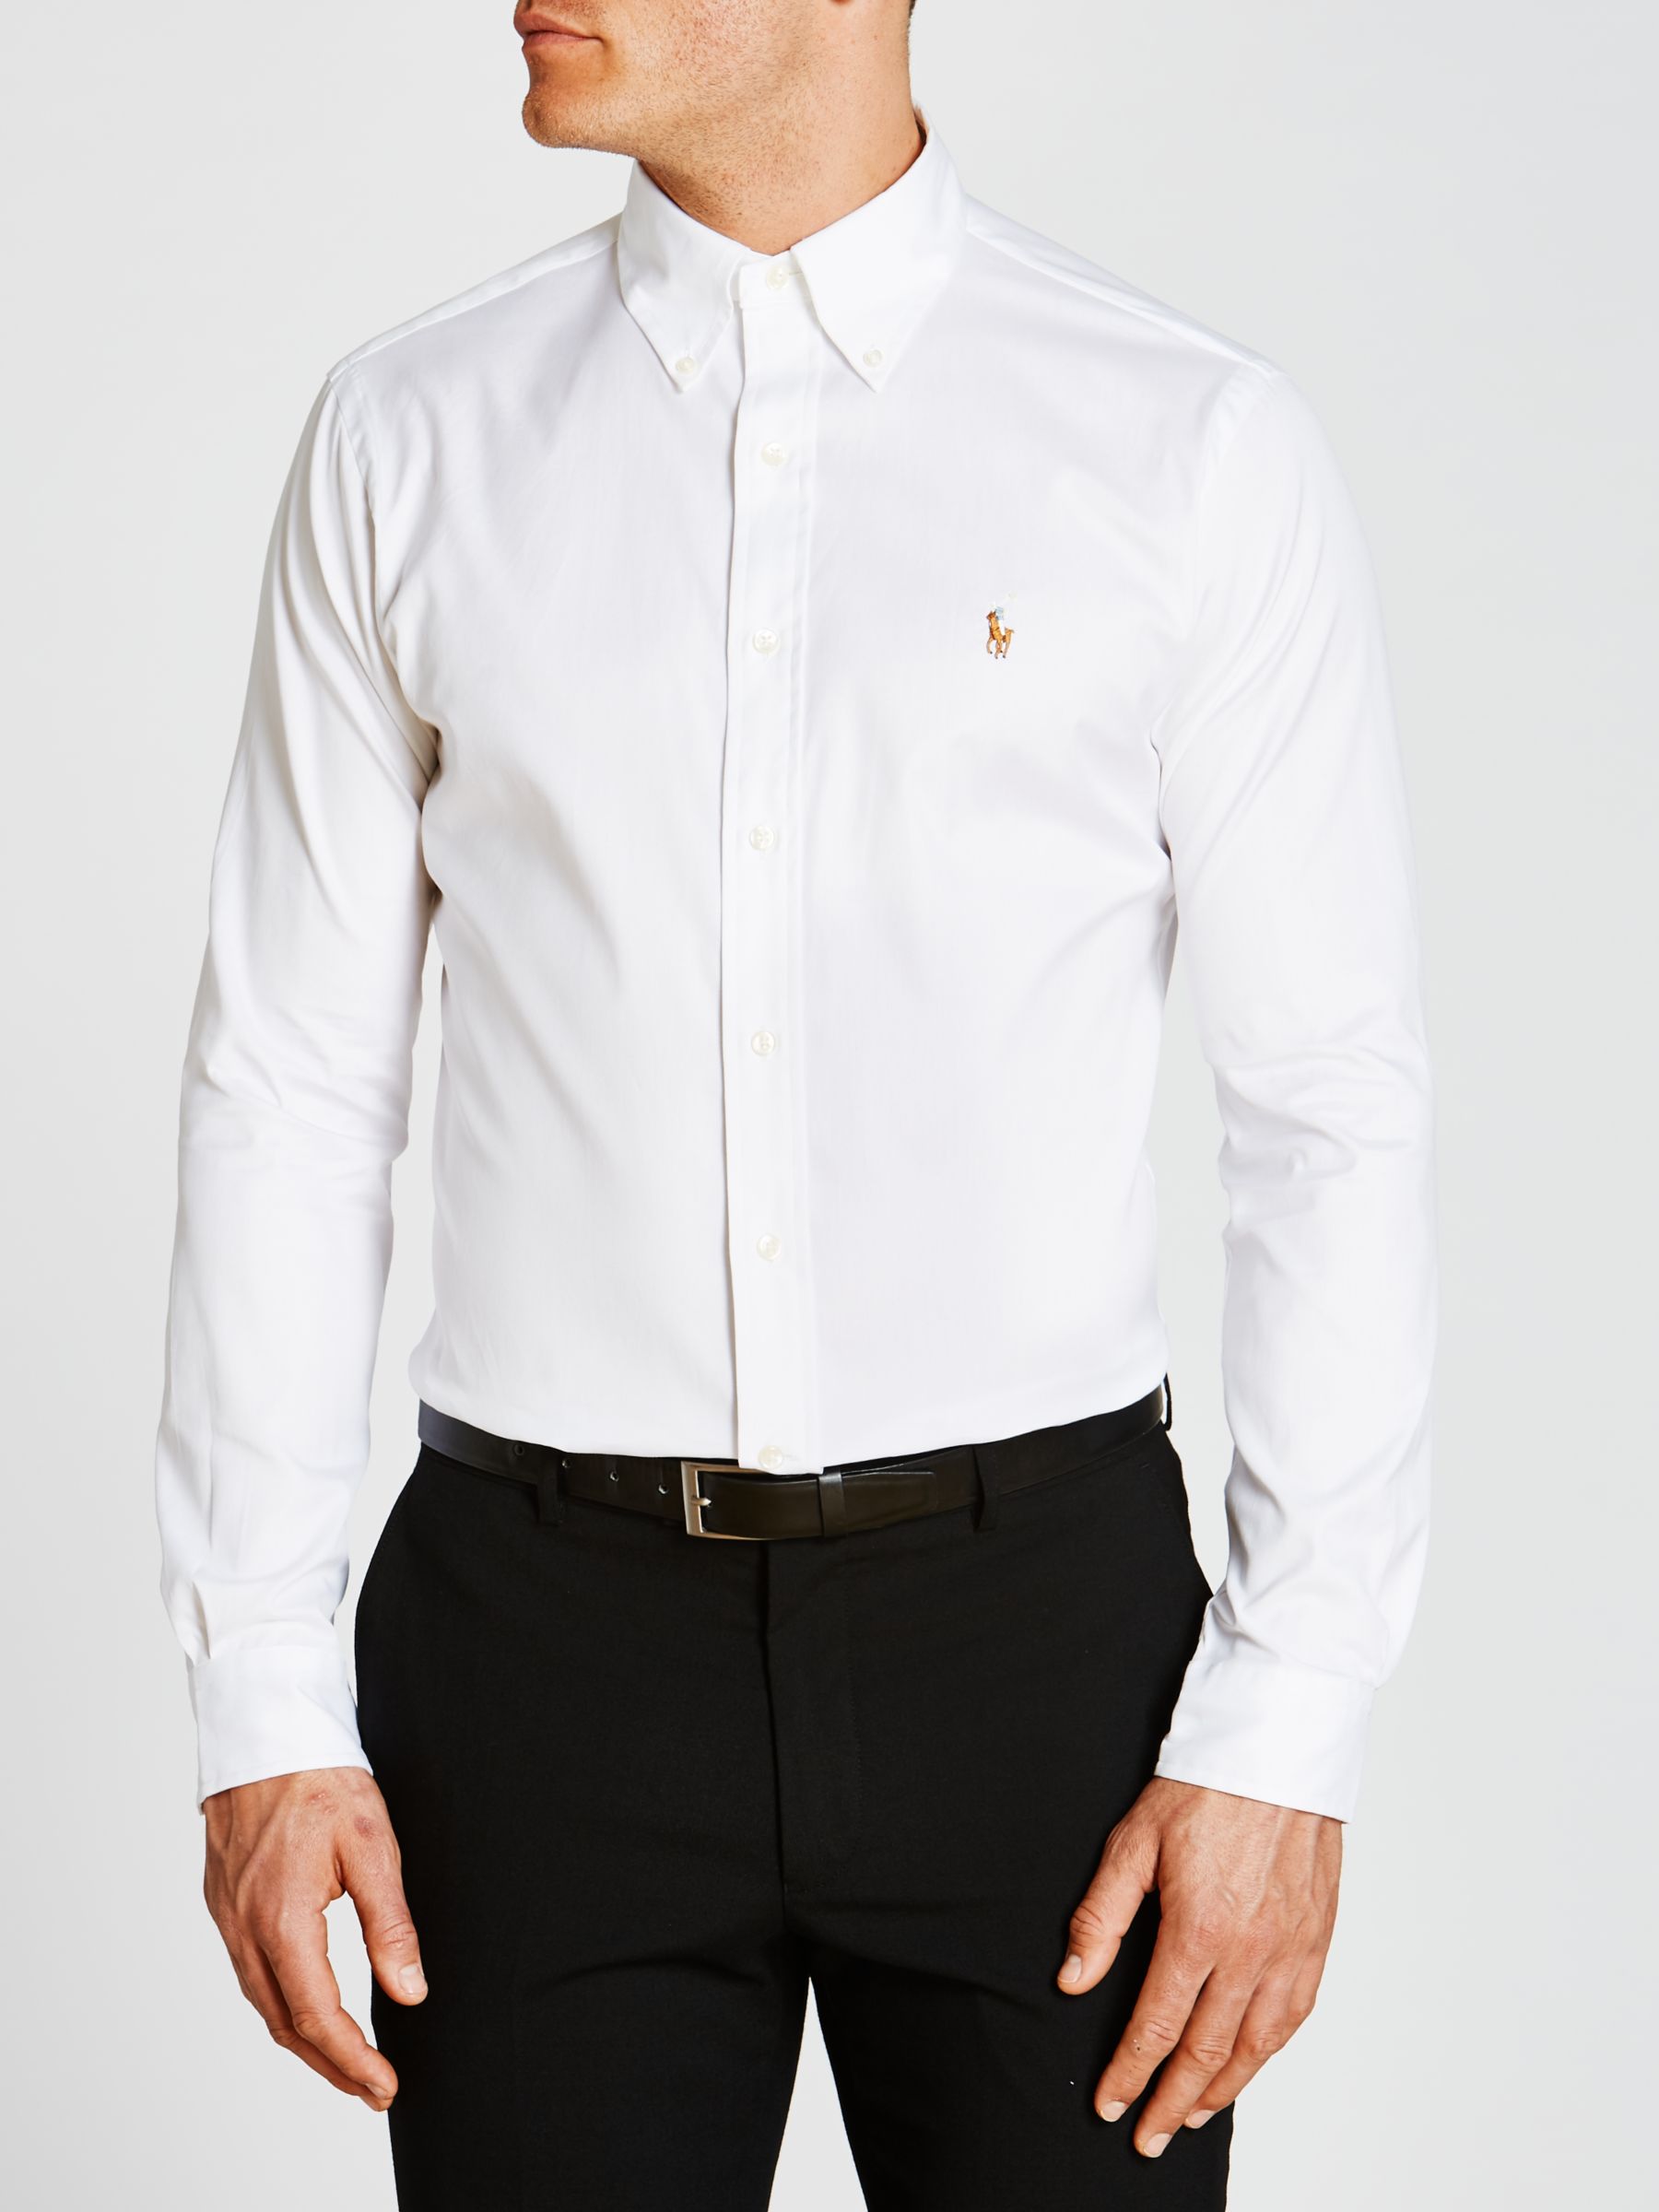 mens white long sleeve ralph lauren shirt